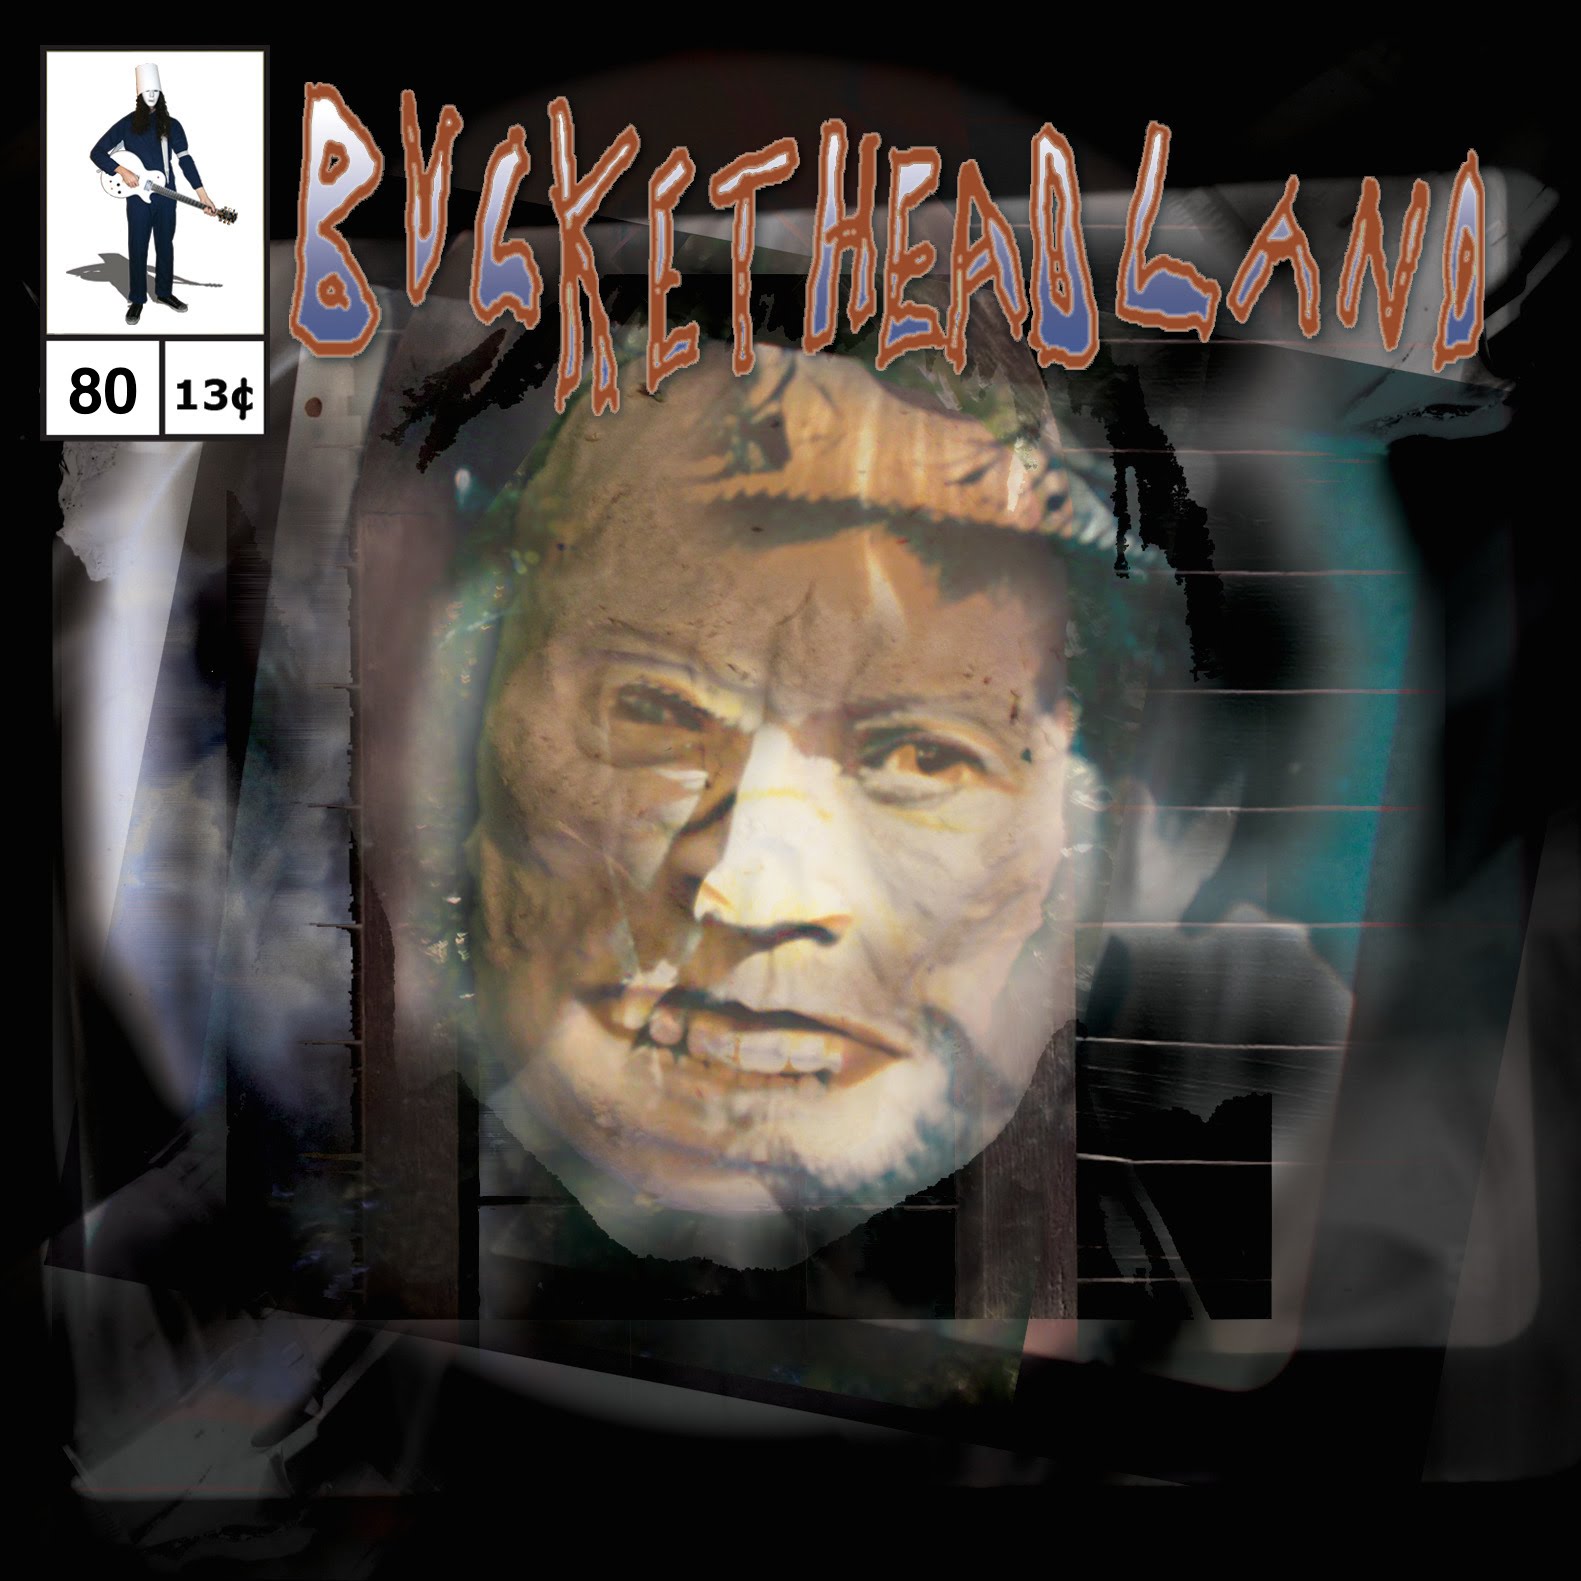 Buckethead - Pike 80: Cutout Animatronic (2014)